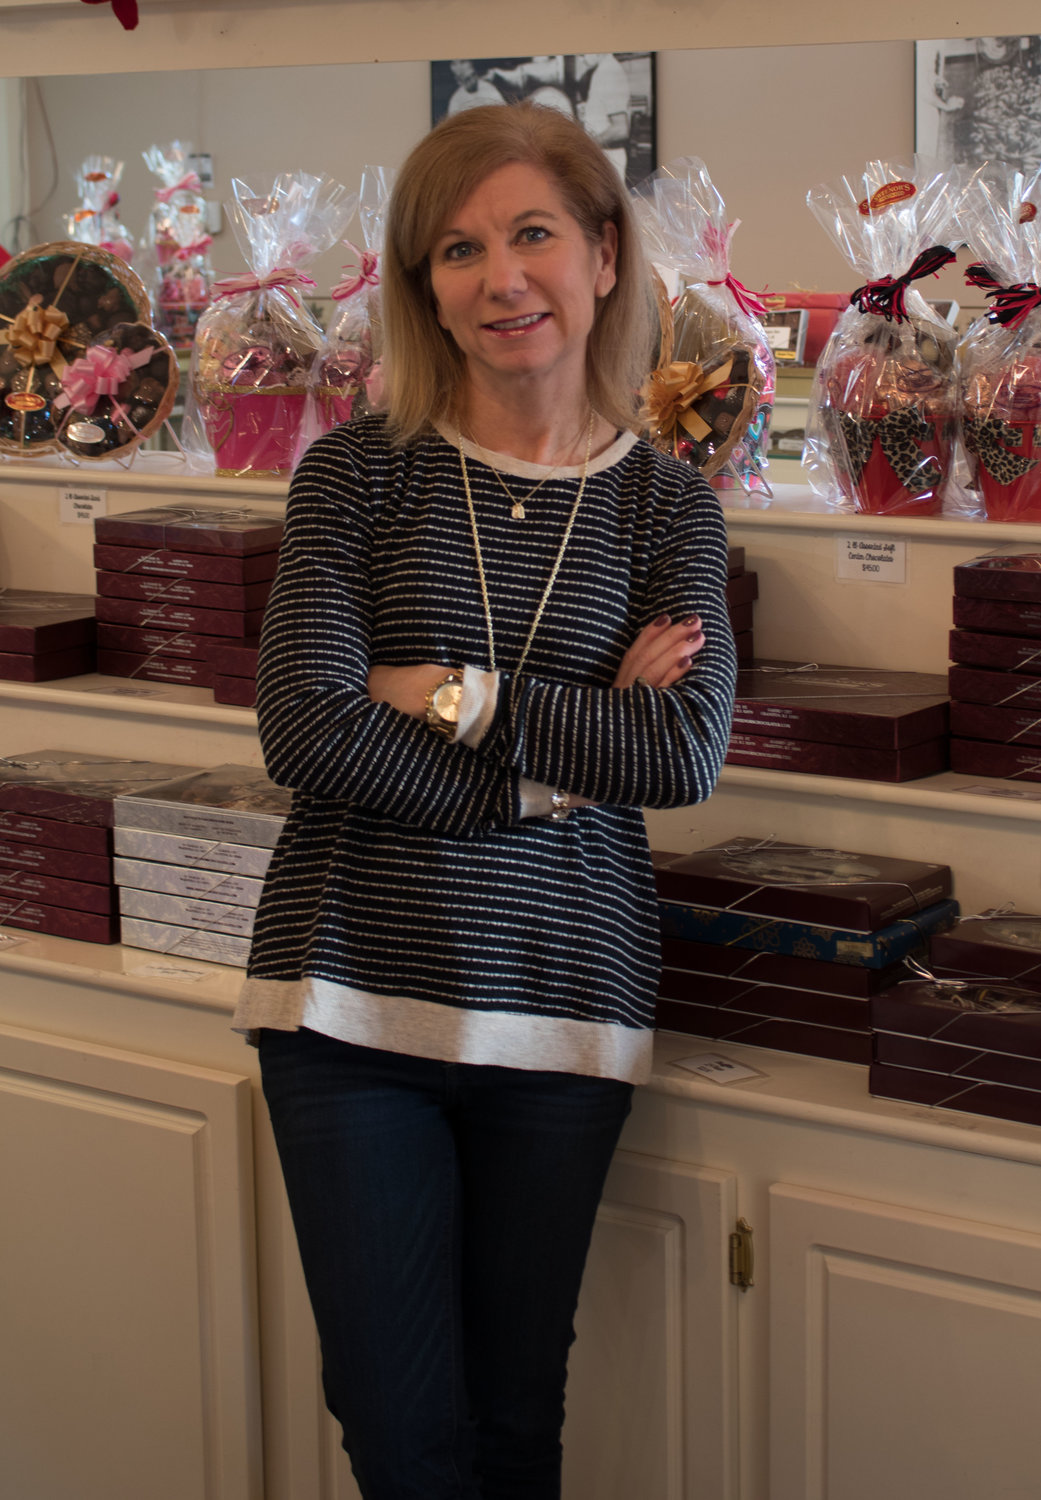 Leading Ladies 2019: Lisa Sweenor Dunham of Sweenor's Chocolates in Wakefield and Garden City